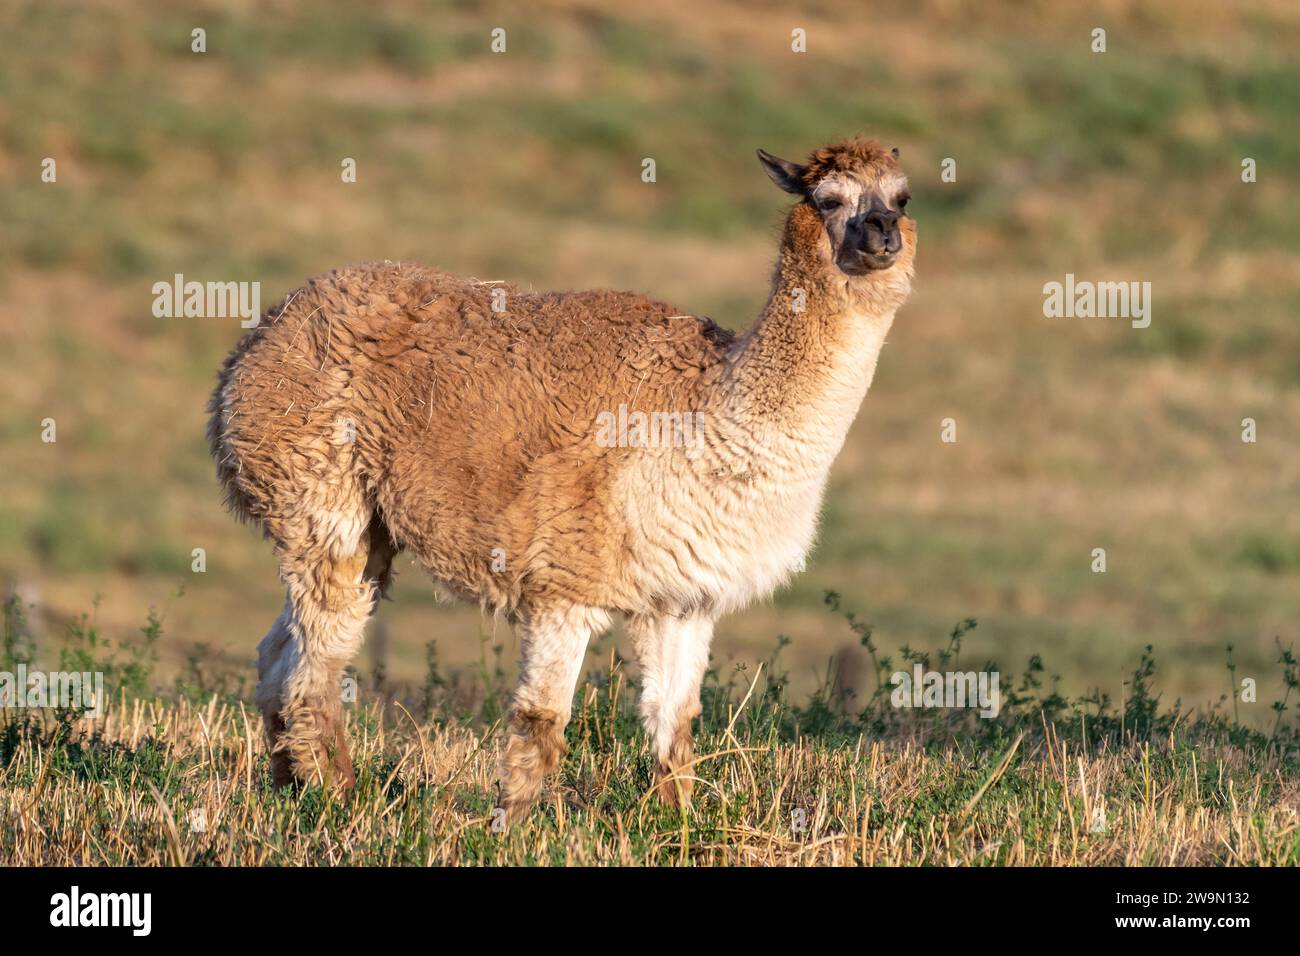 Portrait of an Alpaca standing in a field, British Columbia, Canada Stock Photo